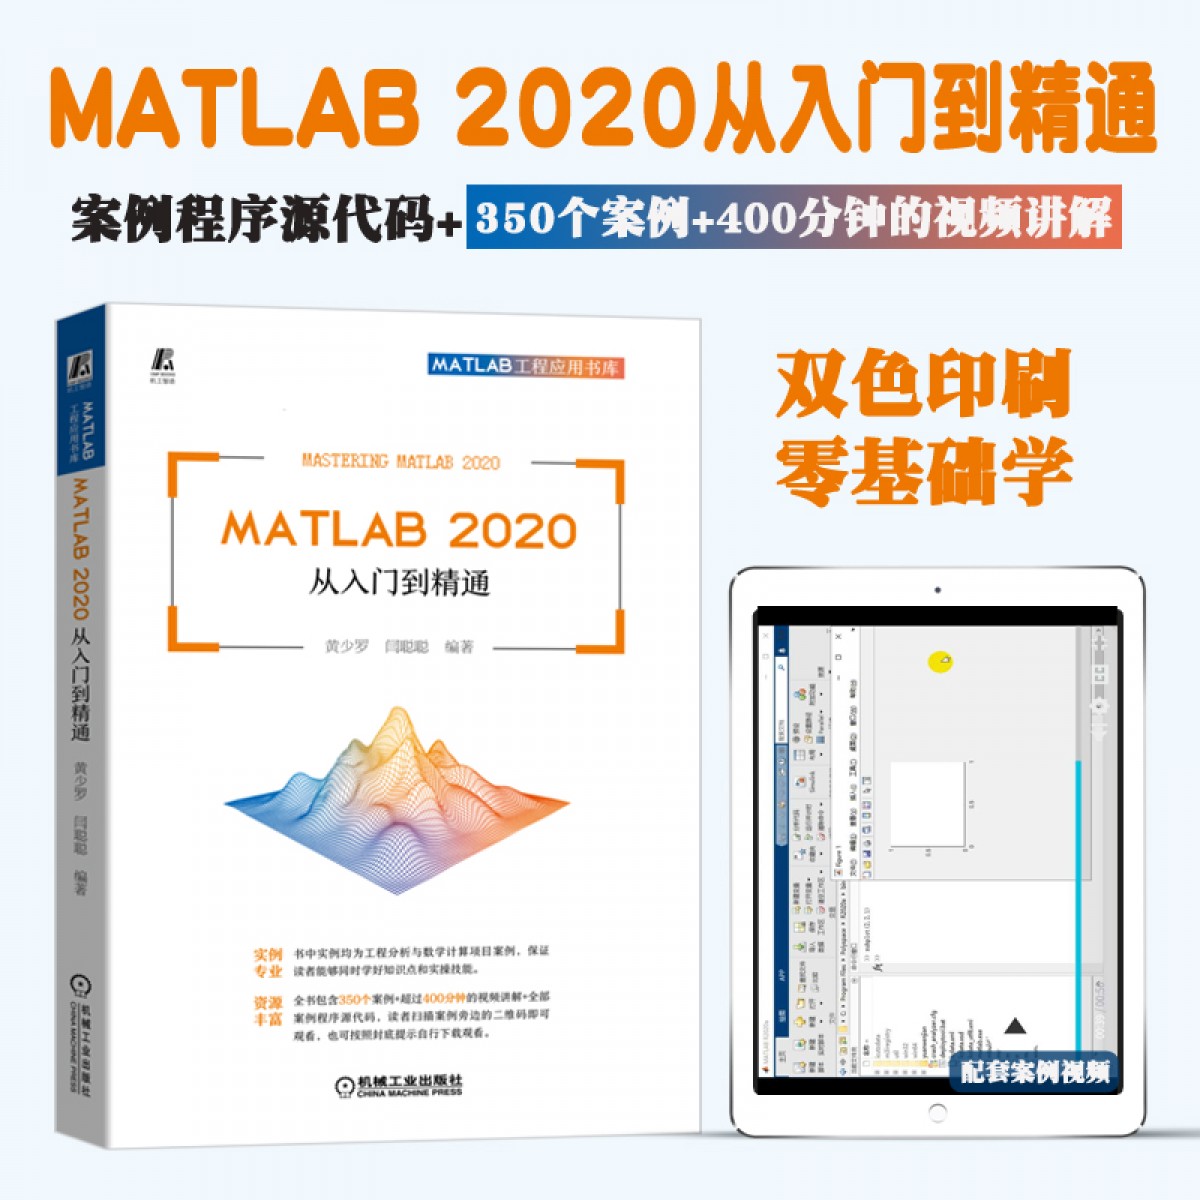 【视频教学】MATLAB 2020 从入门到精通 matlab教程书籍MATLAB R2020a完全自学一本通matlab2018a教程书籍 matlab数学建模应用自学【MATLAB2020】从入门到精通